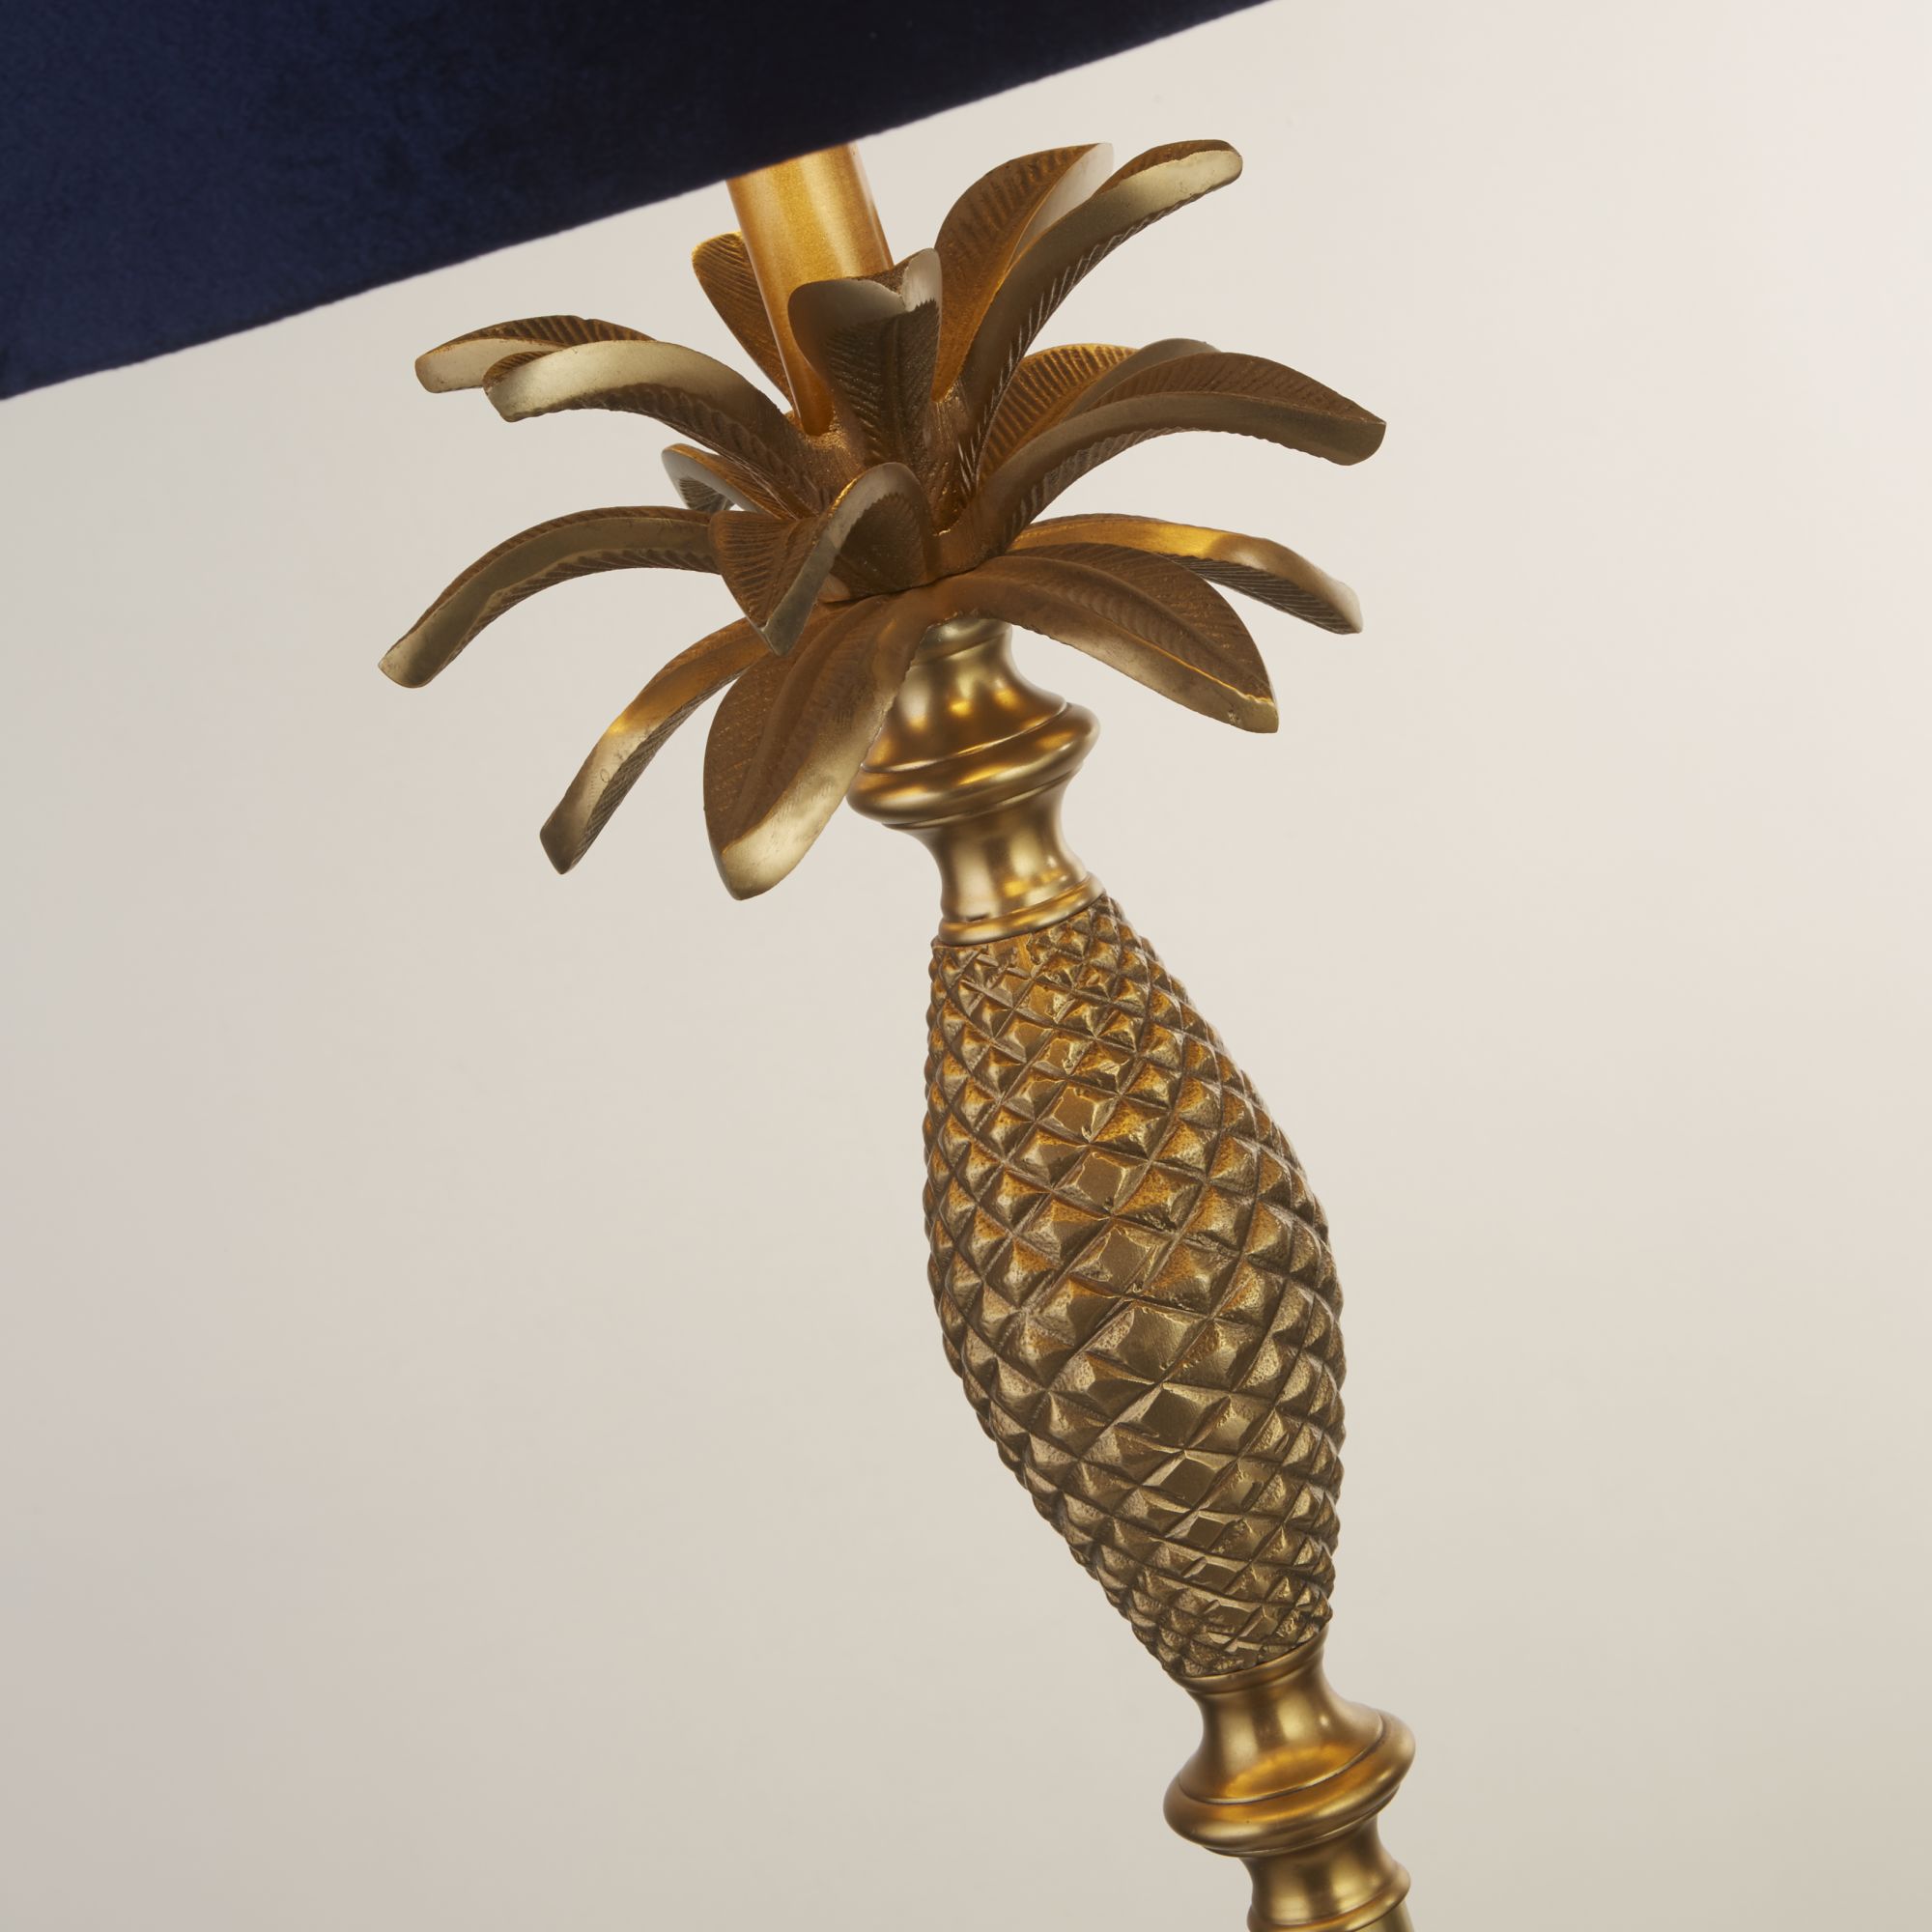 Lux & Belle Pineapple Floor Lamp Base - Antique Brass Metal